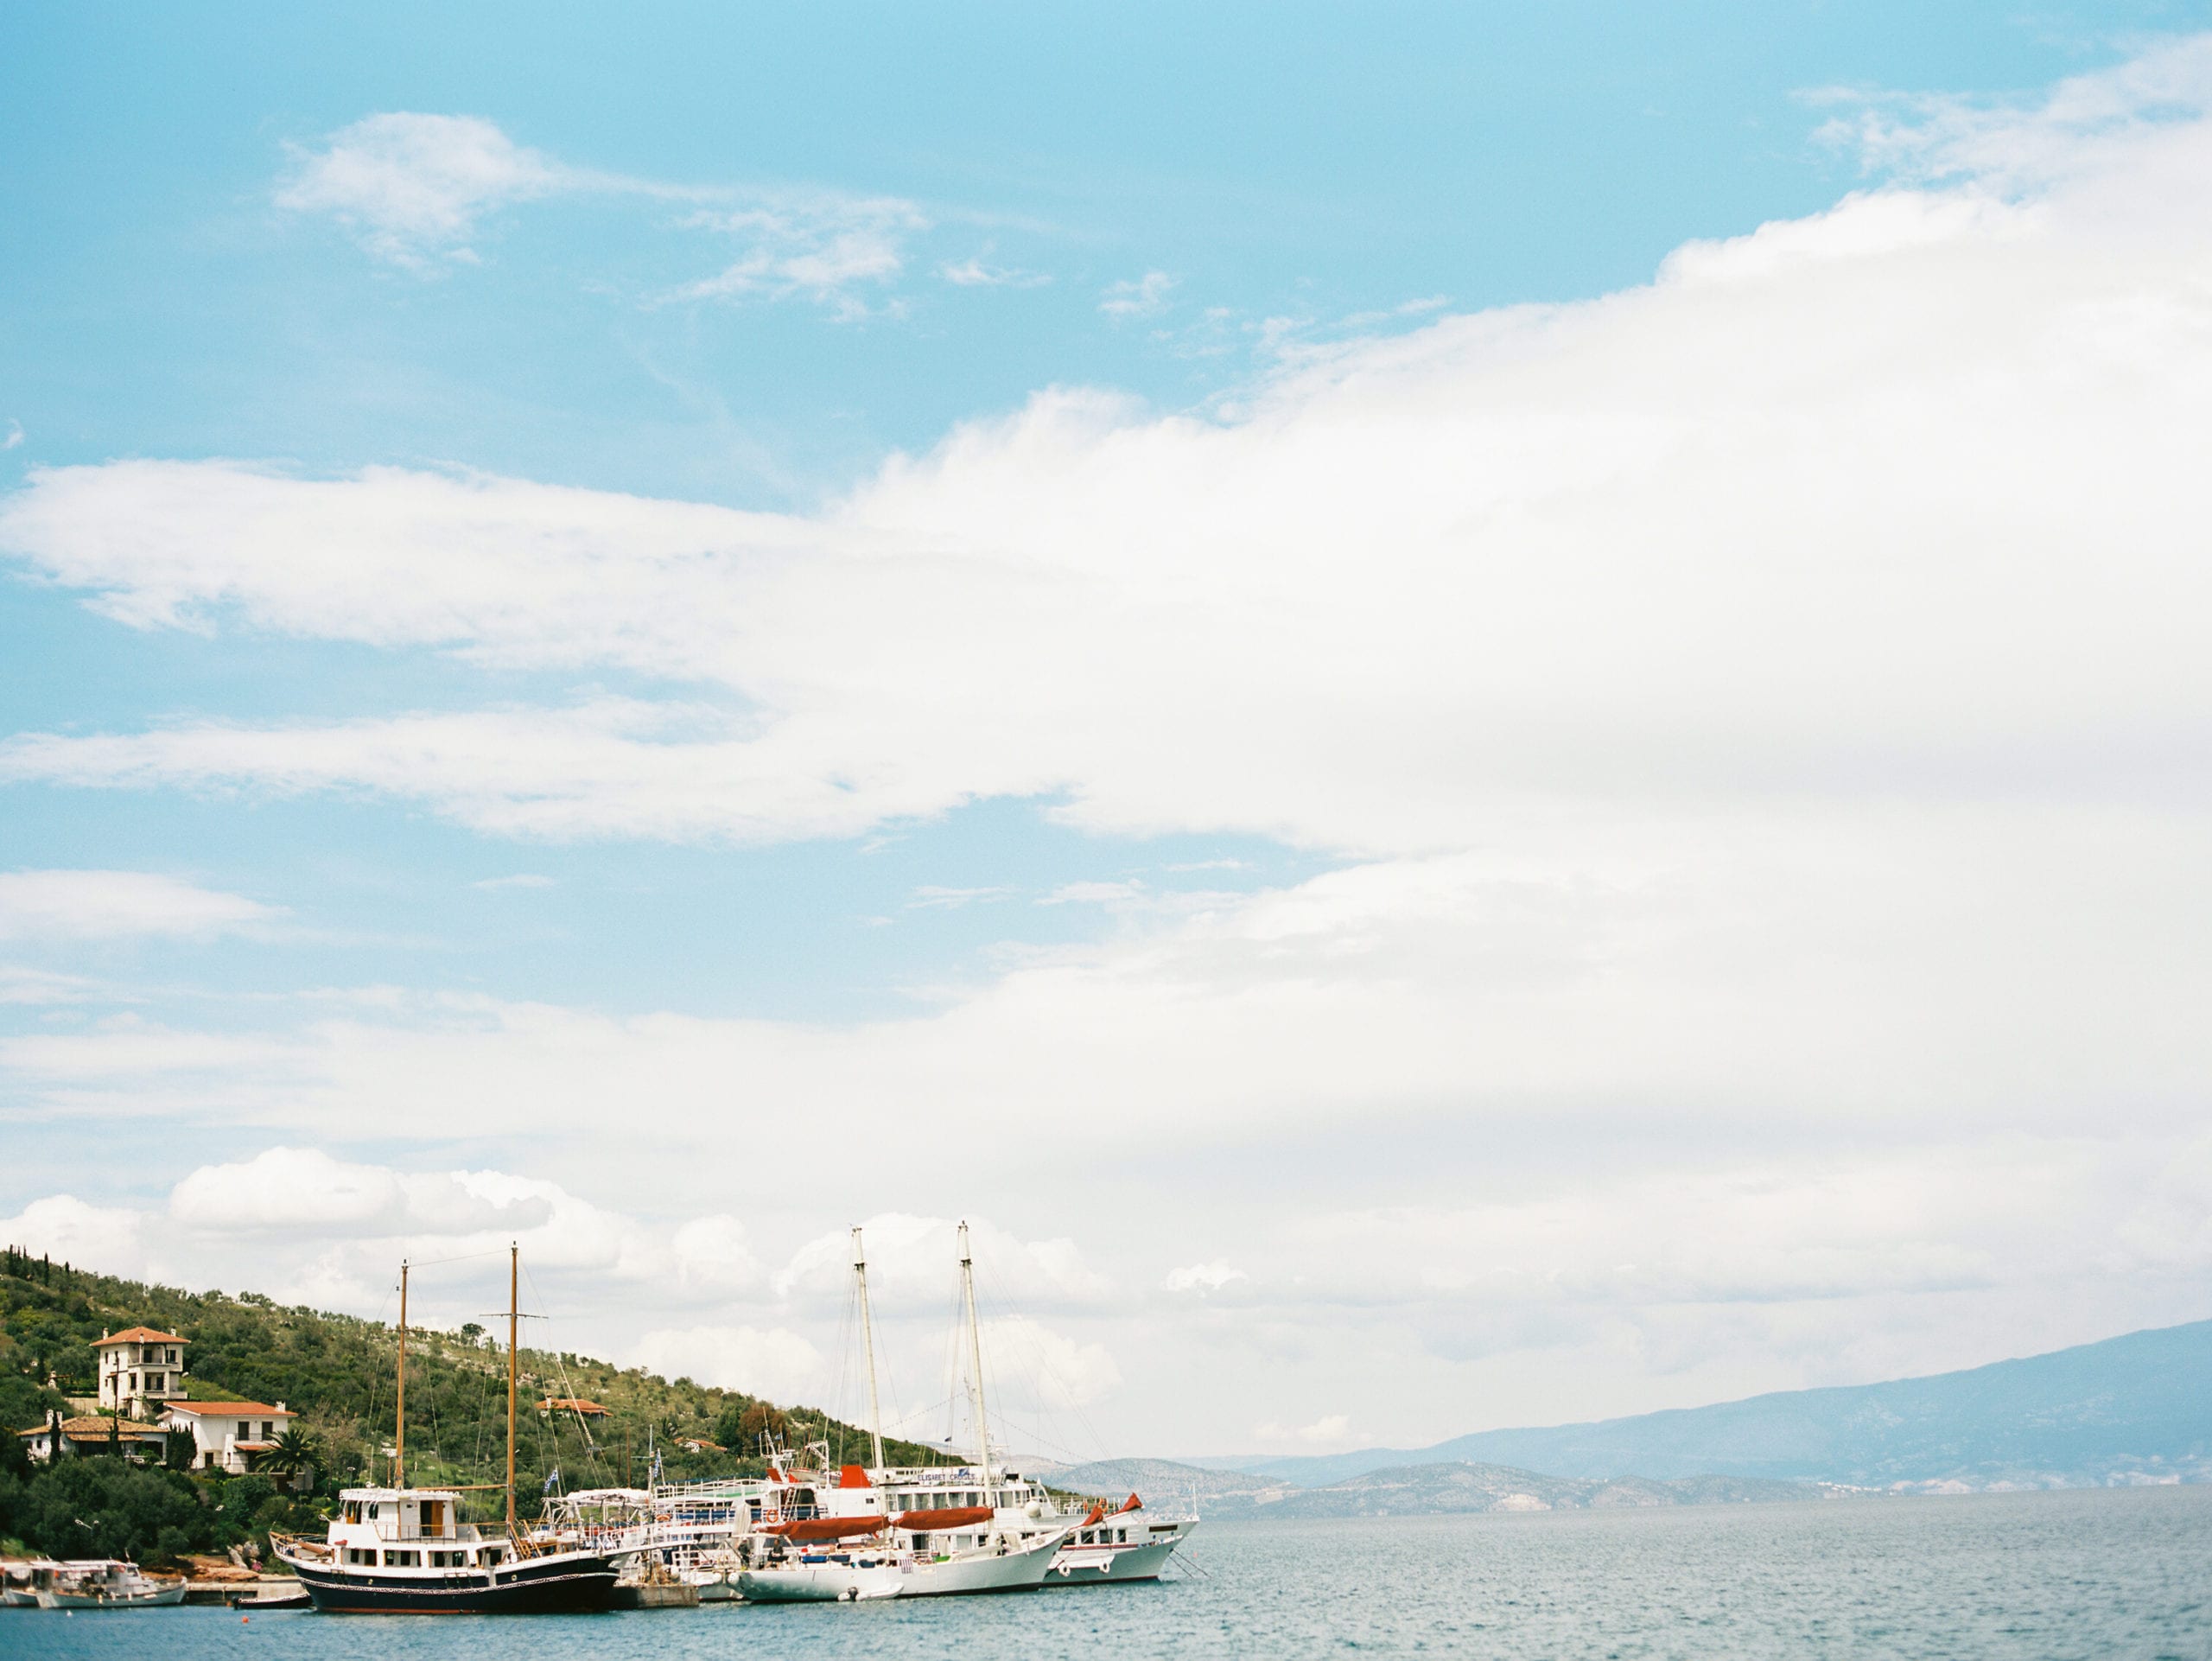 Santorini wedding photographer and destination greece wedding photographer J.J. Au'Clair documents a gorgeous landscape of sailboats.